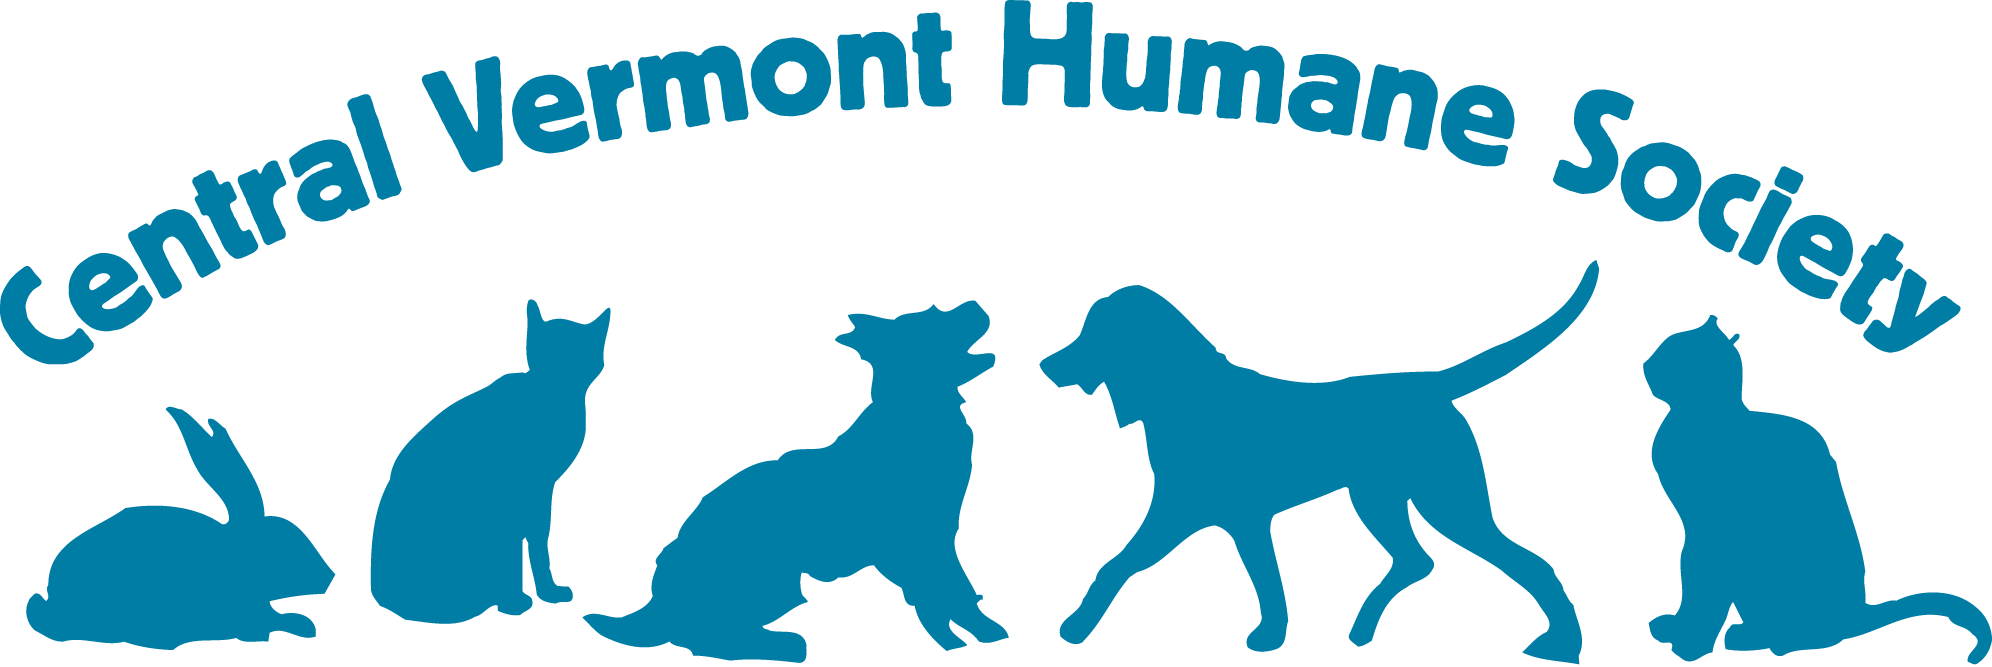 Cvhs Central Vermont Humane Society - Humane Society Vt (1992x667)